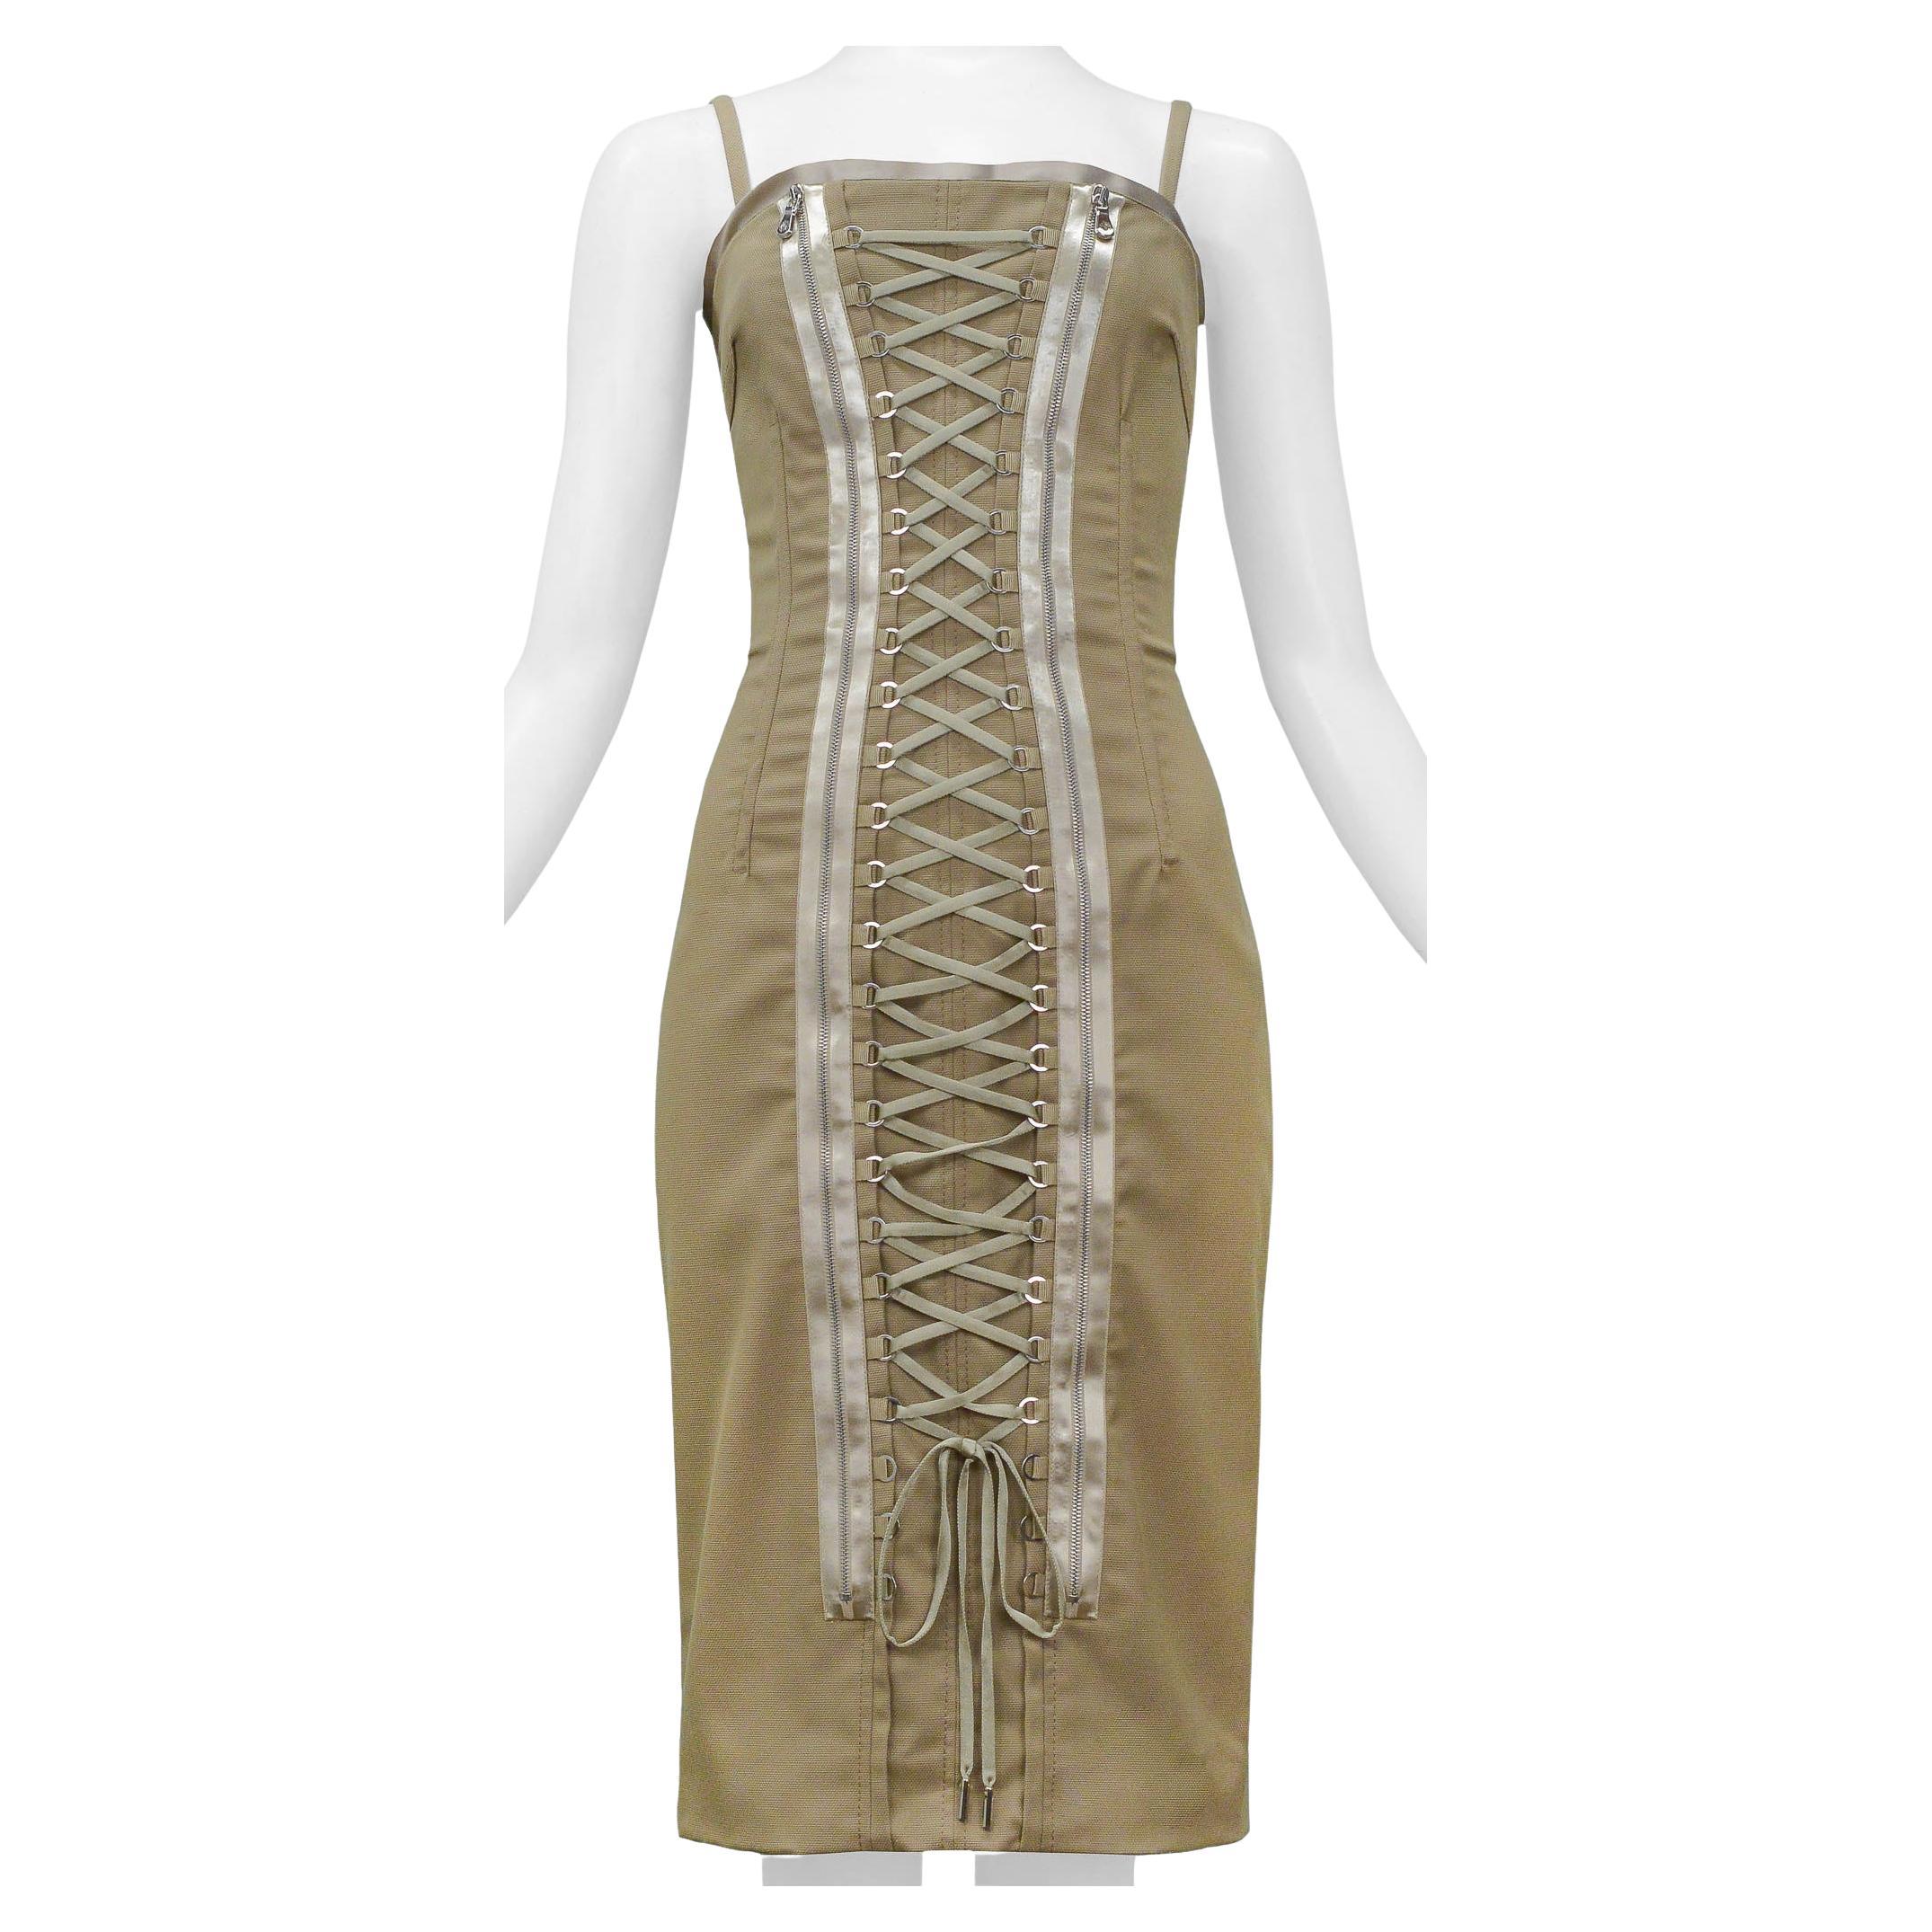 Dolce & Gabbana Khaki Lace Up Corset Dress With Reflective Trim For Sale